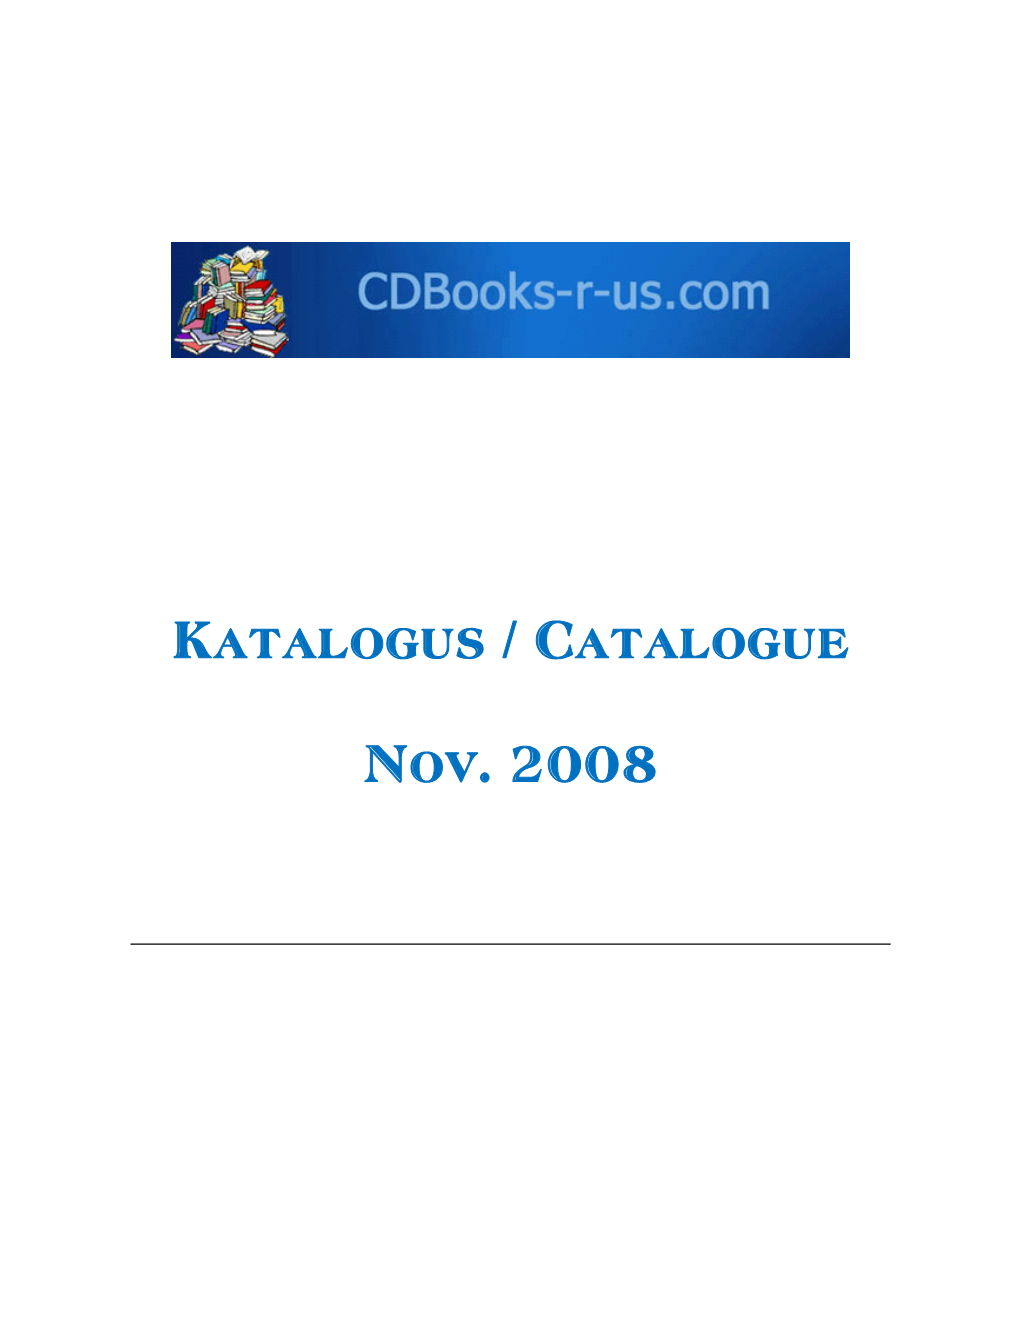 Cdbooks-R-Us Catalogue November 2008